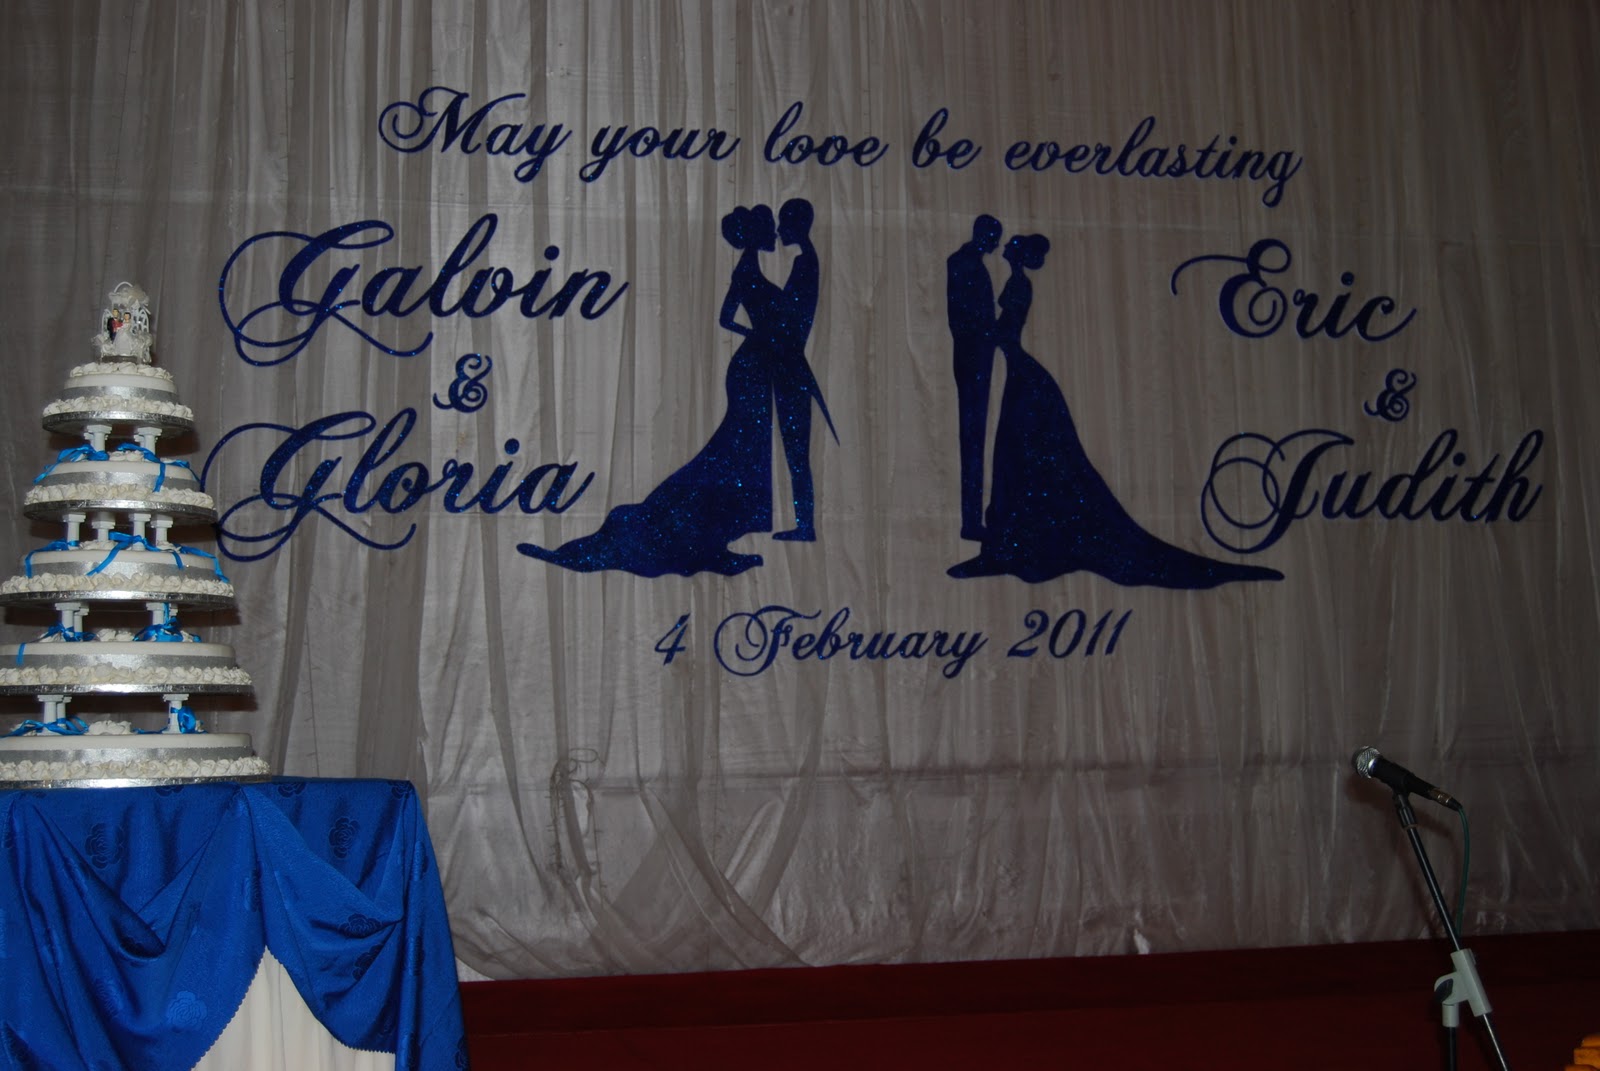 Wedding backdrop for Galvin